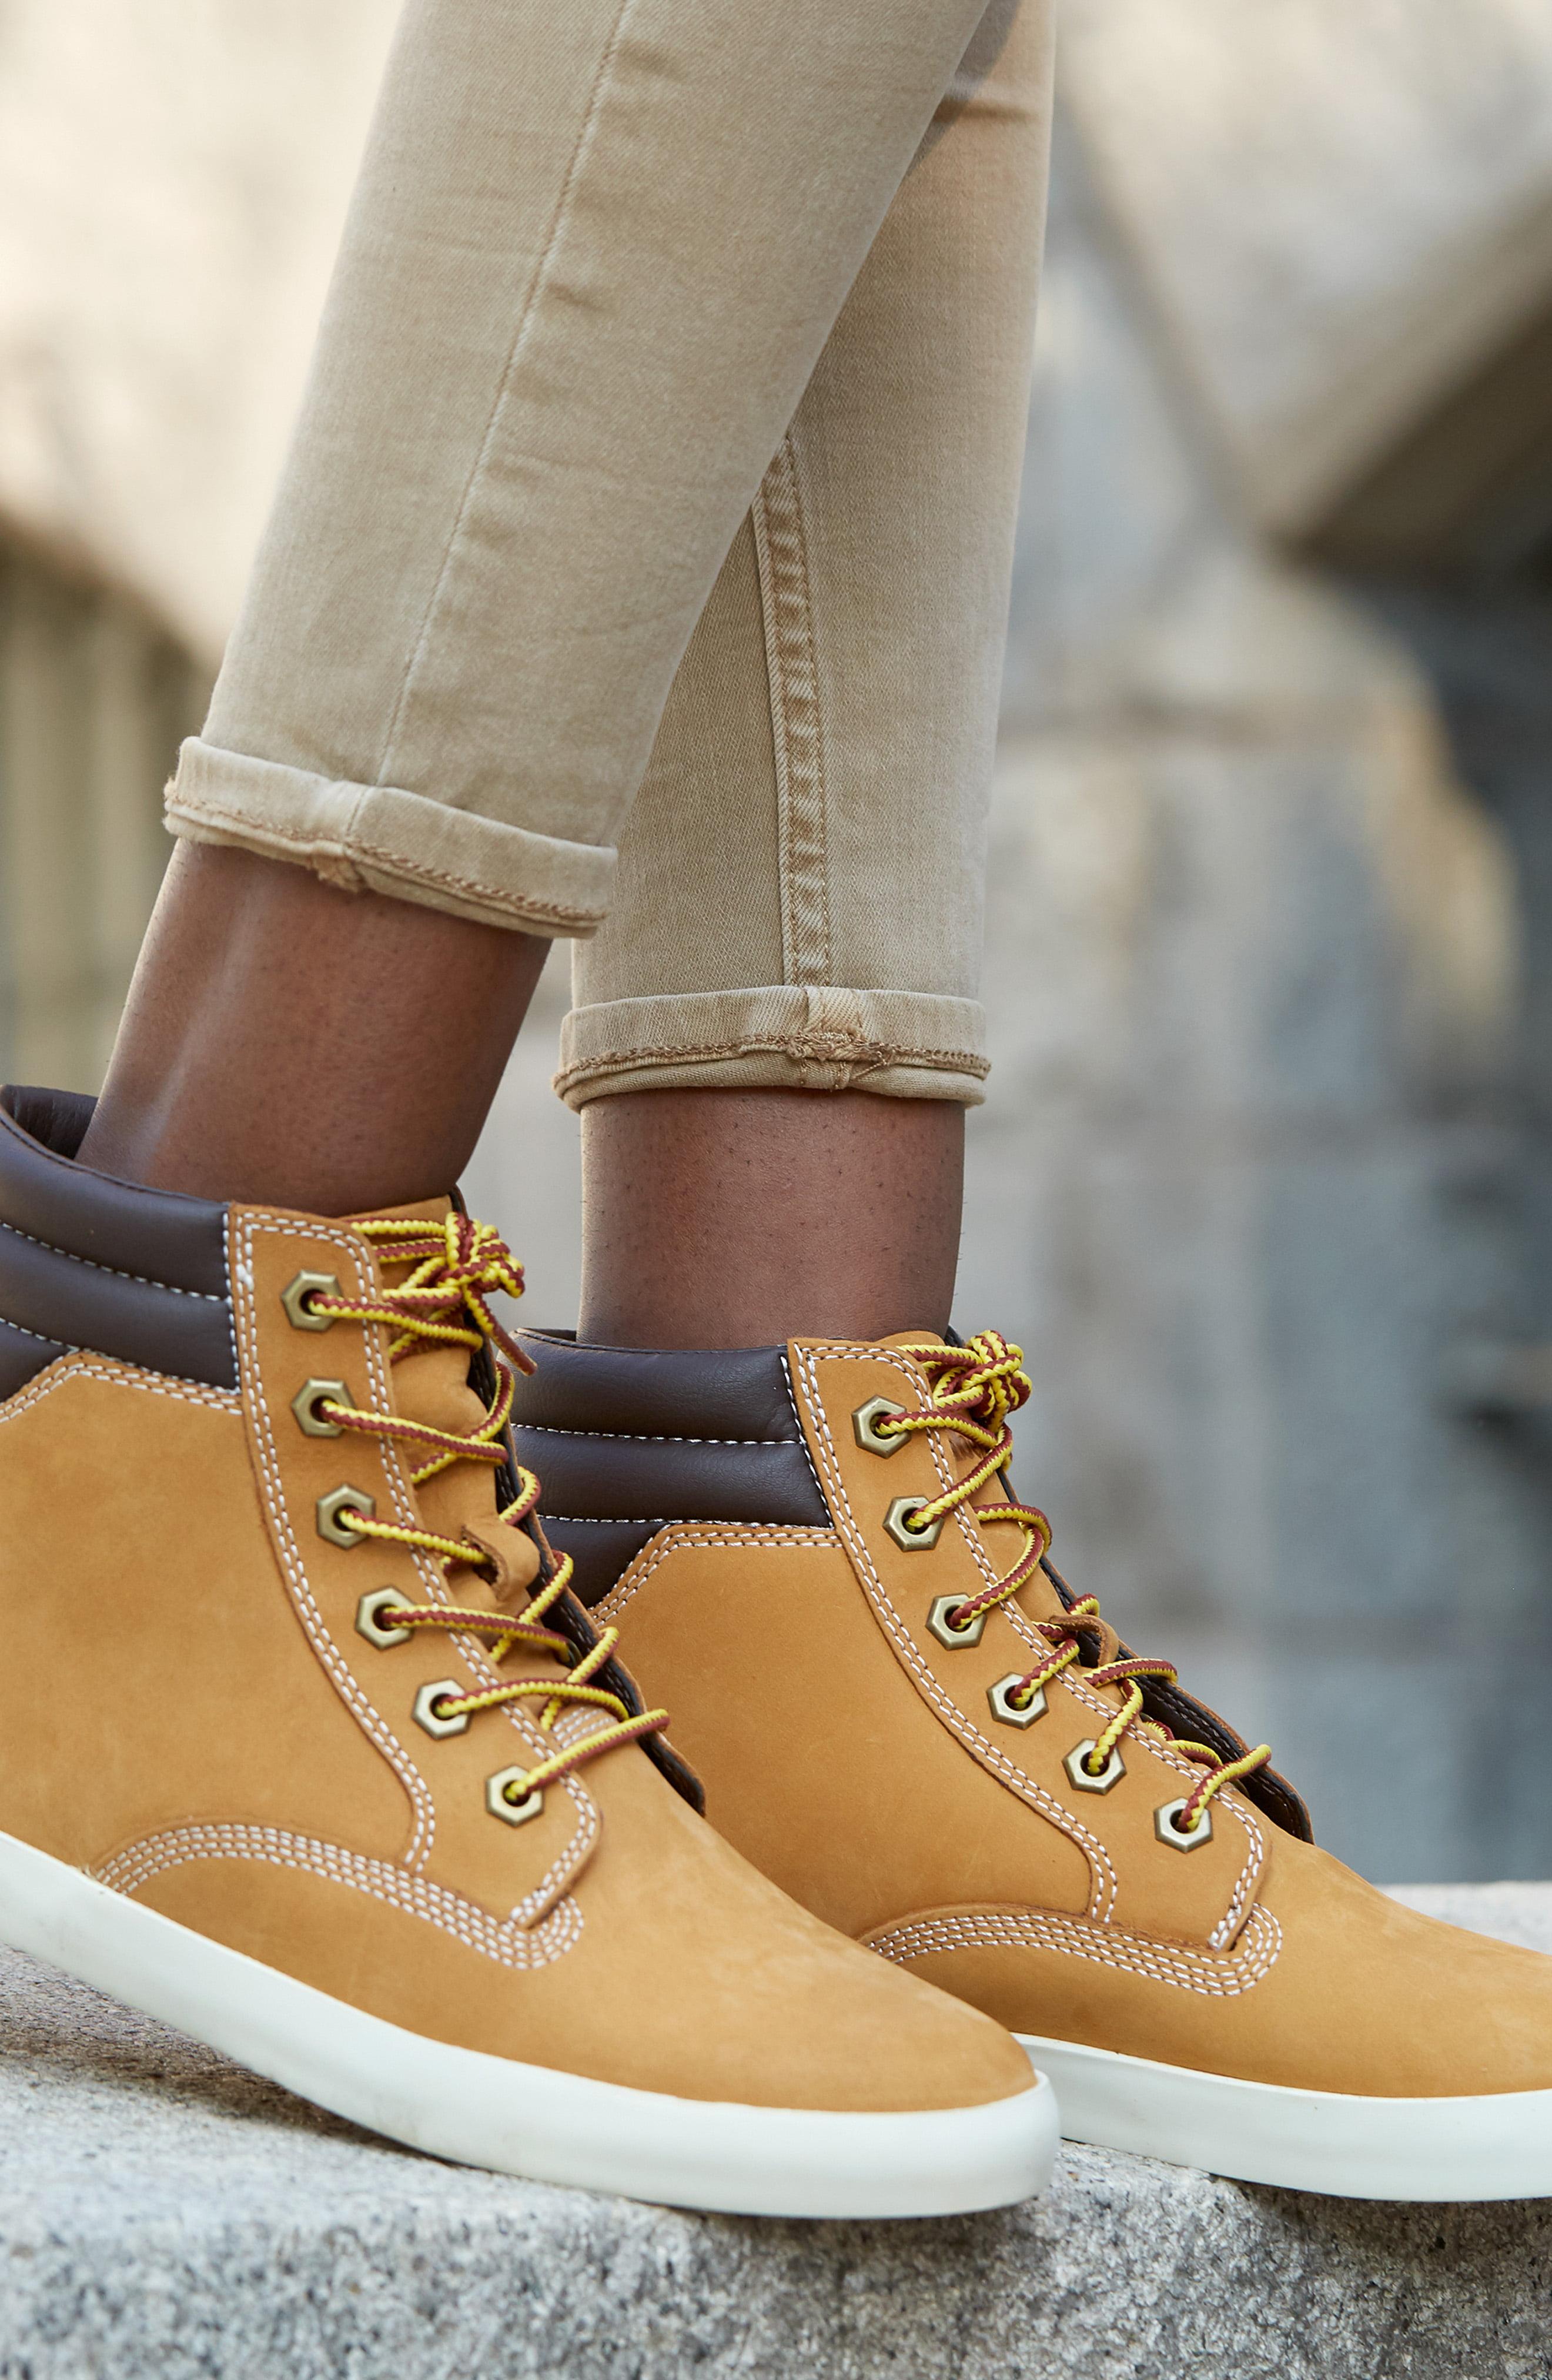 Timberland Dausette Sneaker Boot in Brown - Lyst